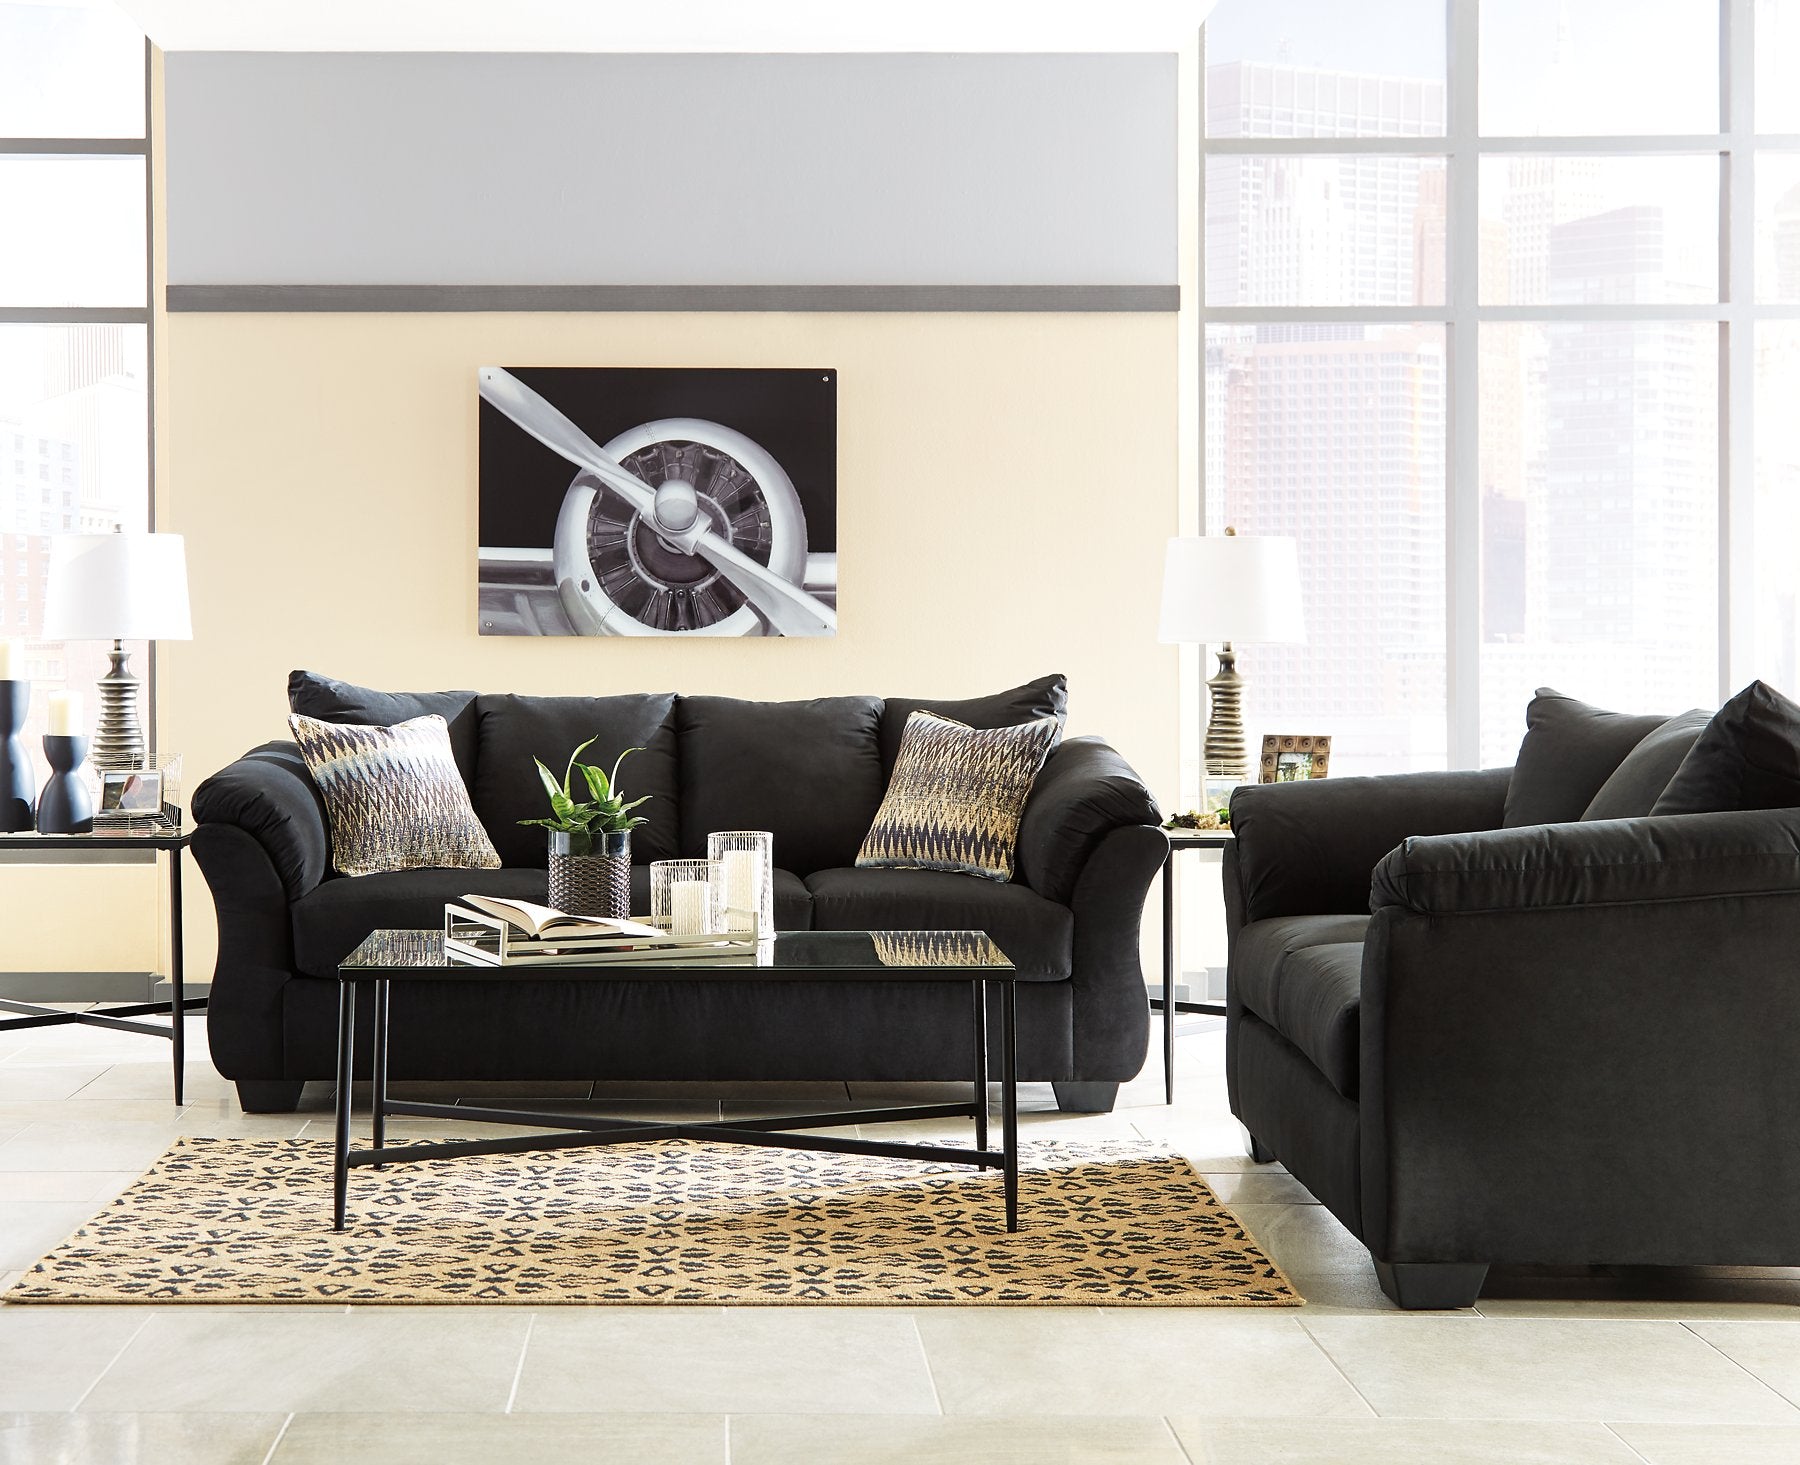 Darcy Sofa - Half Price Furniture